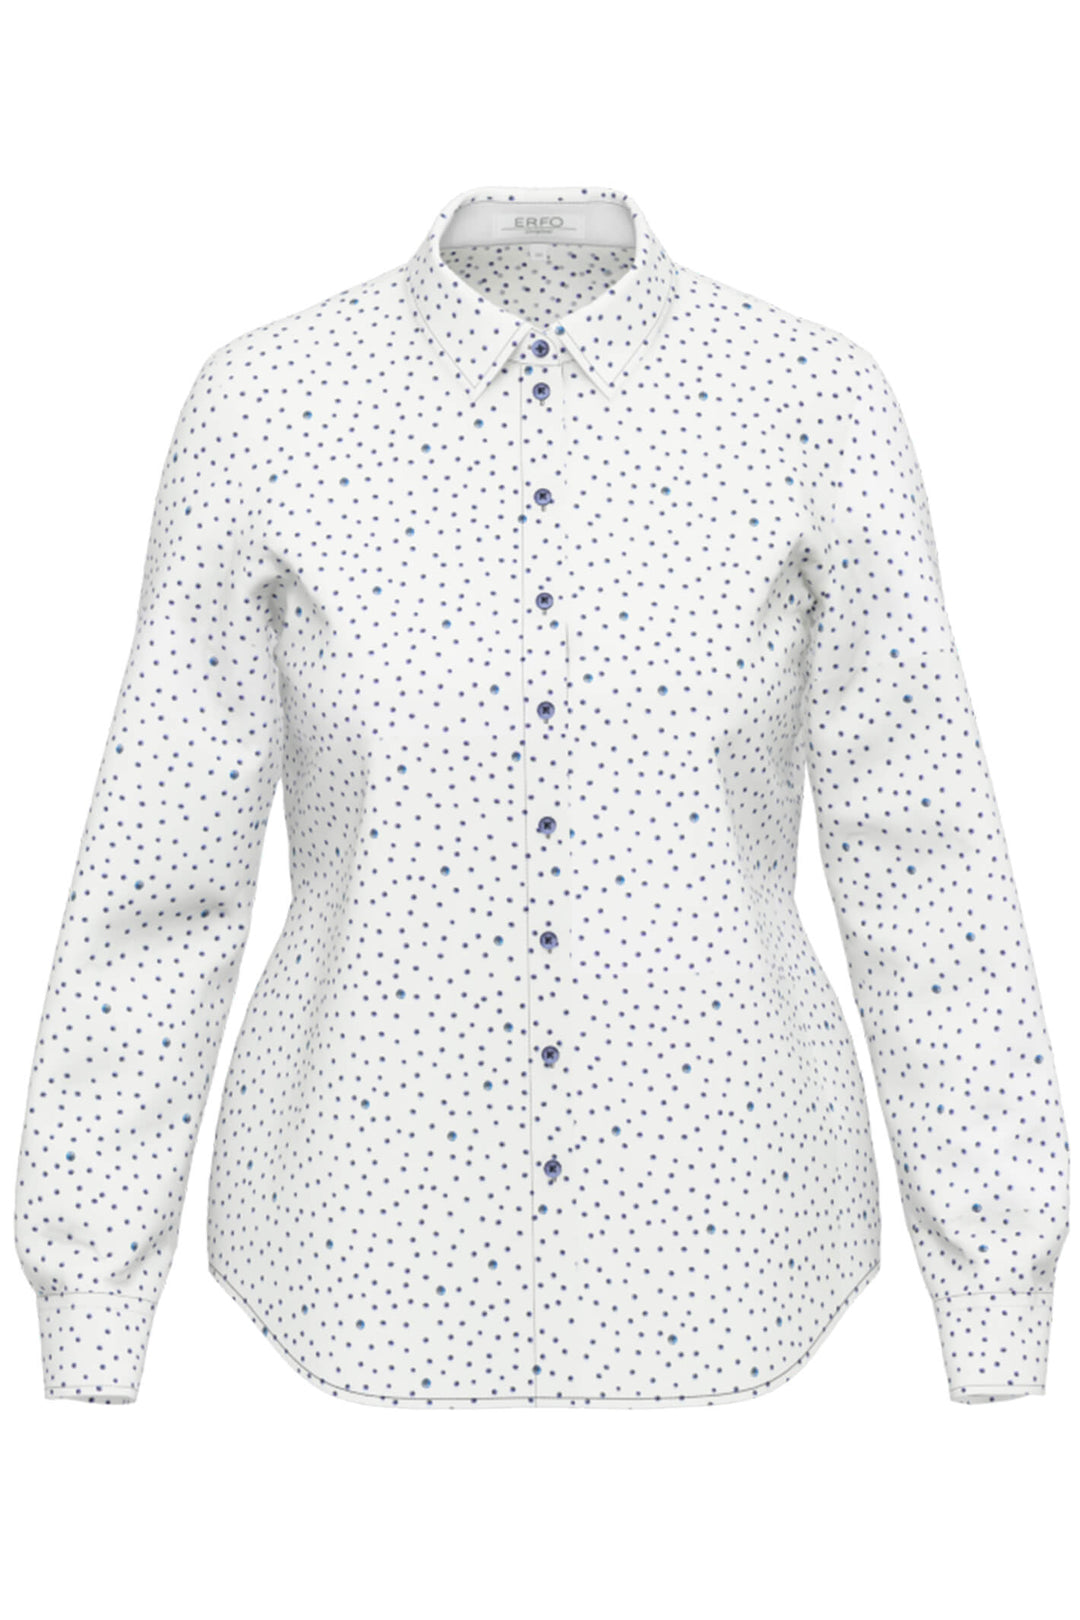 Erfo 101100100 Royal Blue Polka Spot Shirt - Shirley Allum Boutique